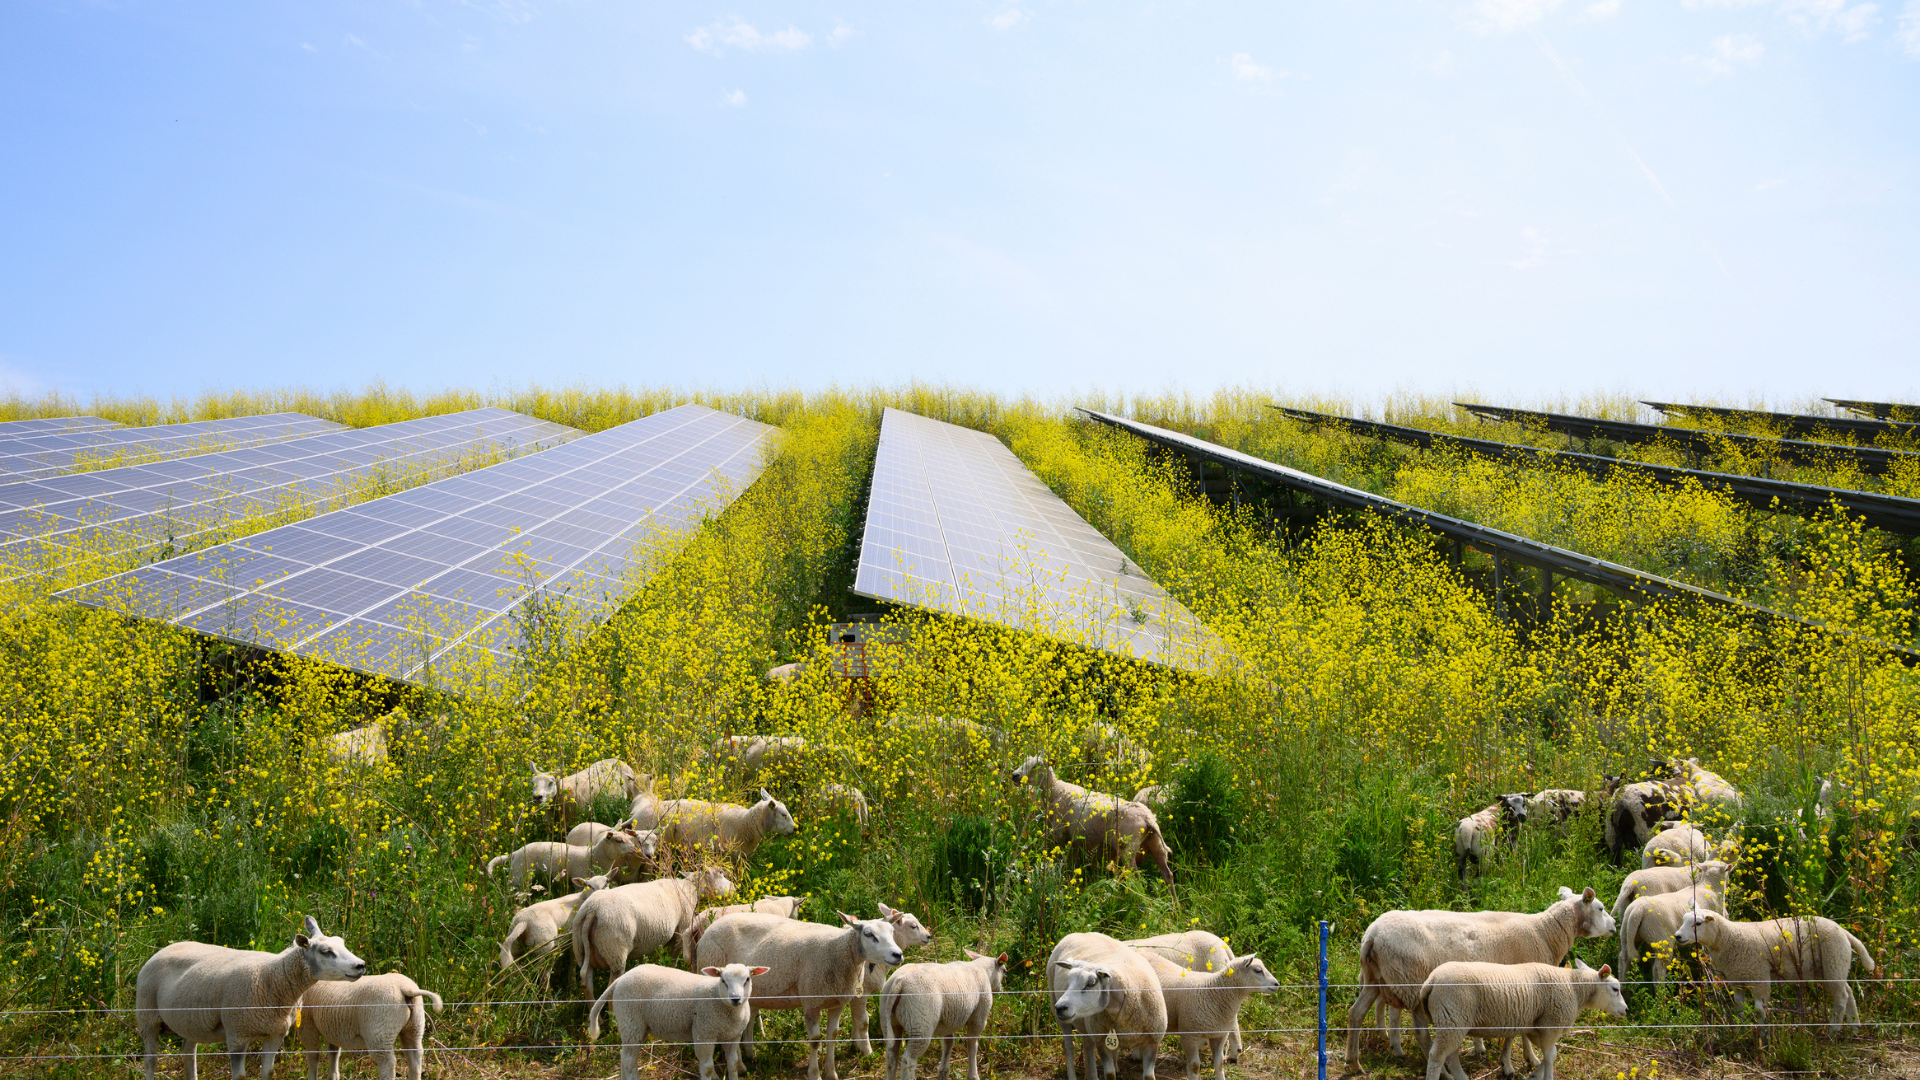 Sheep grazing mustard plants at solar farm.